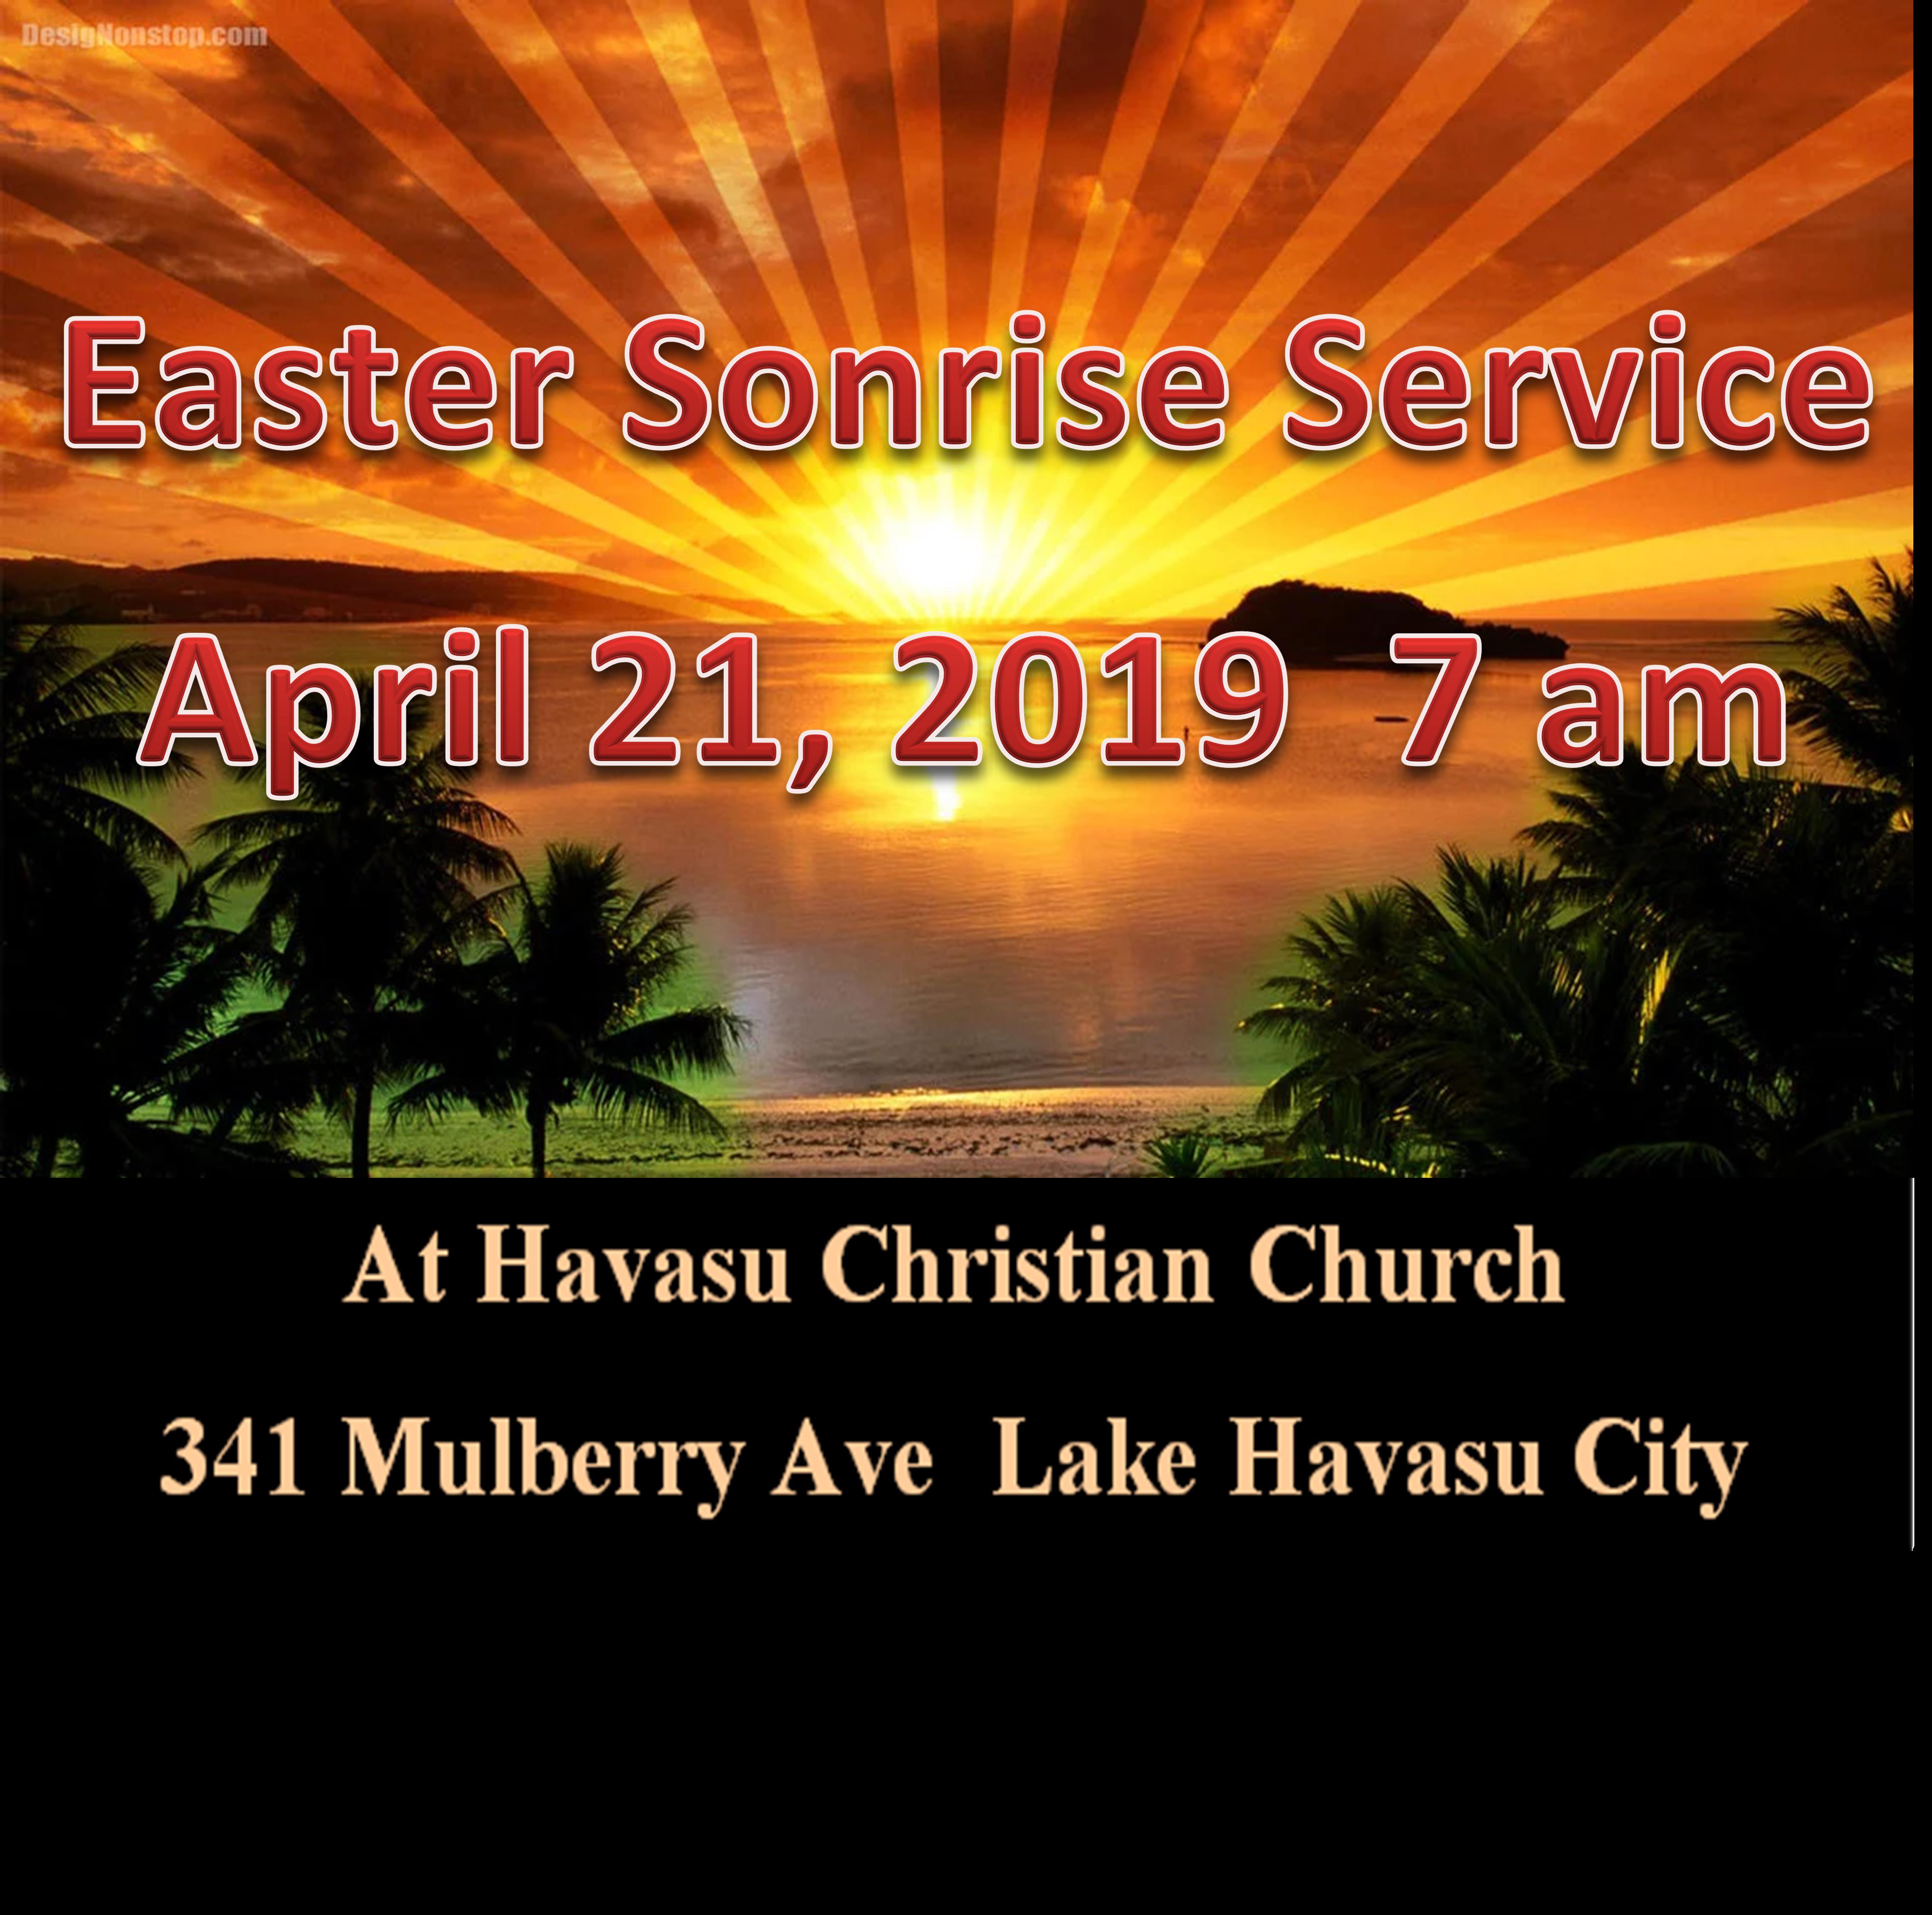 Easter Sonrise Service